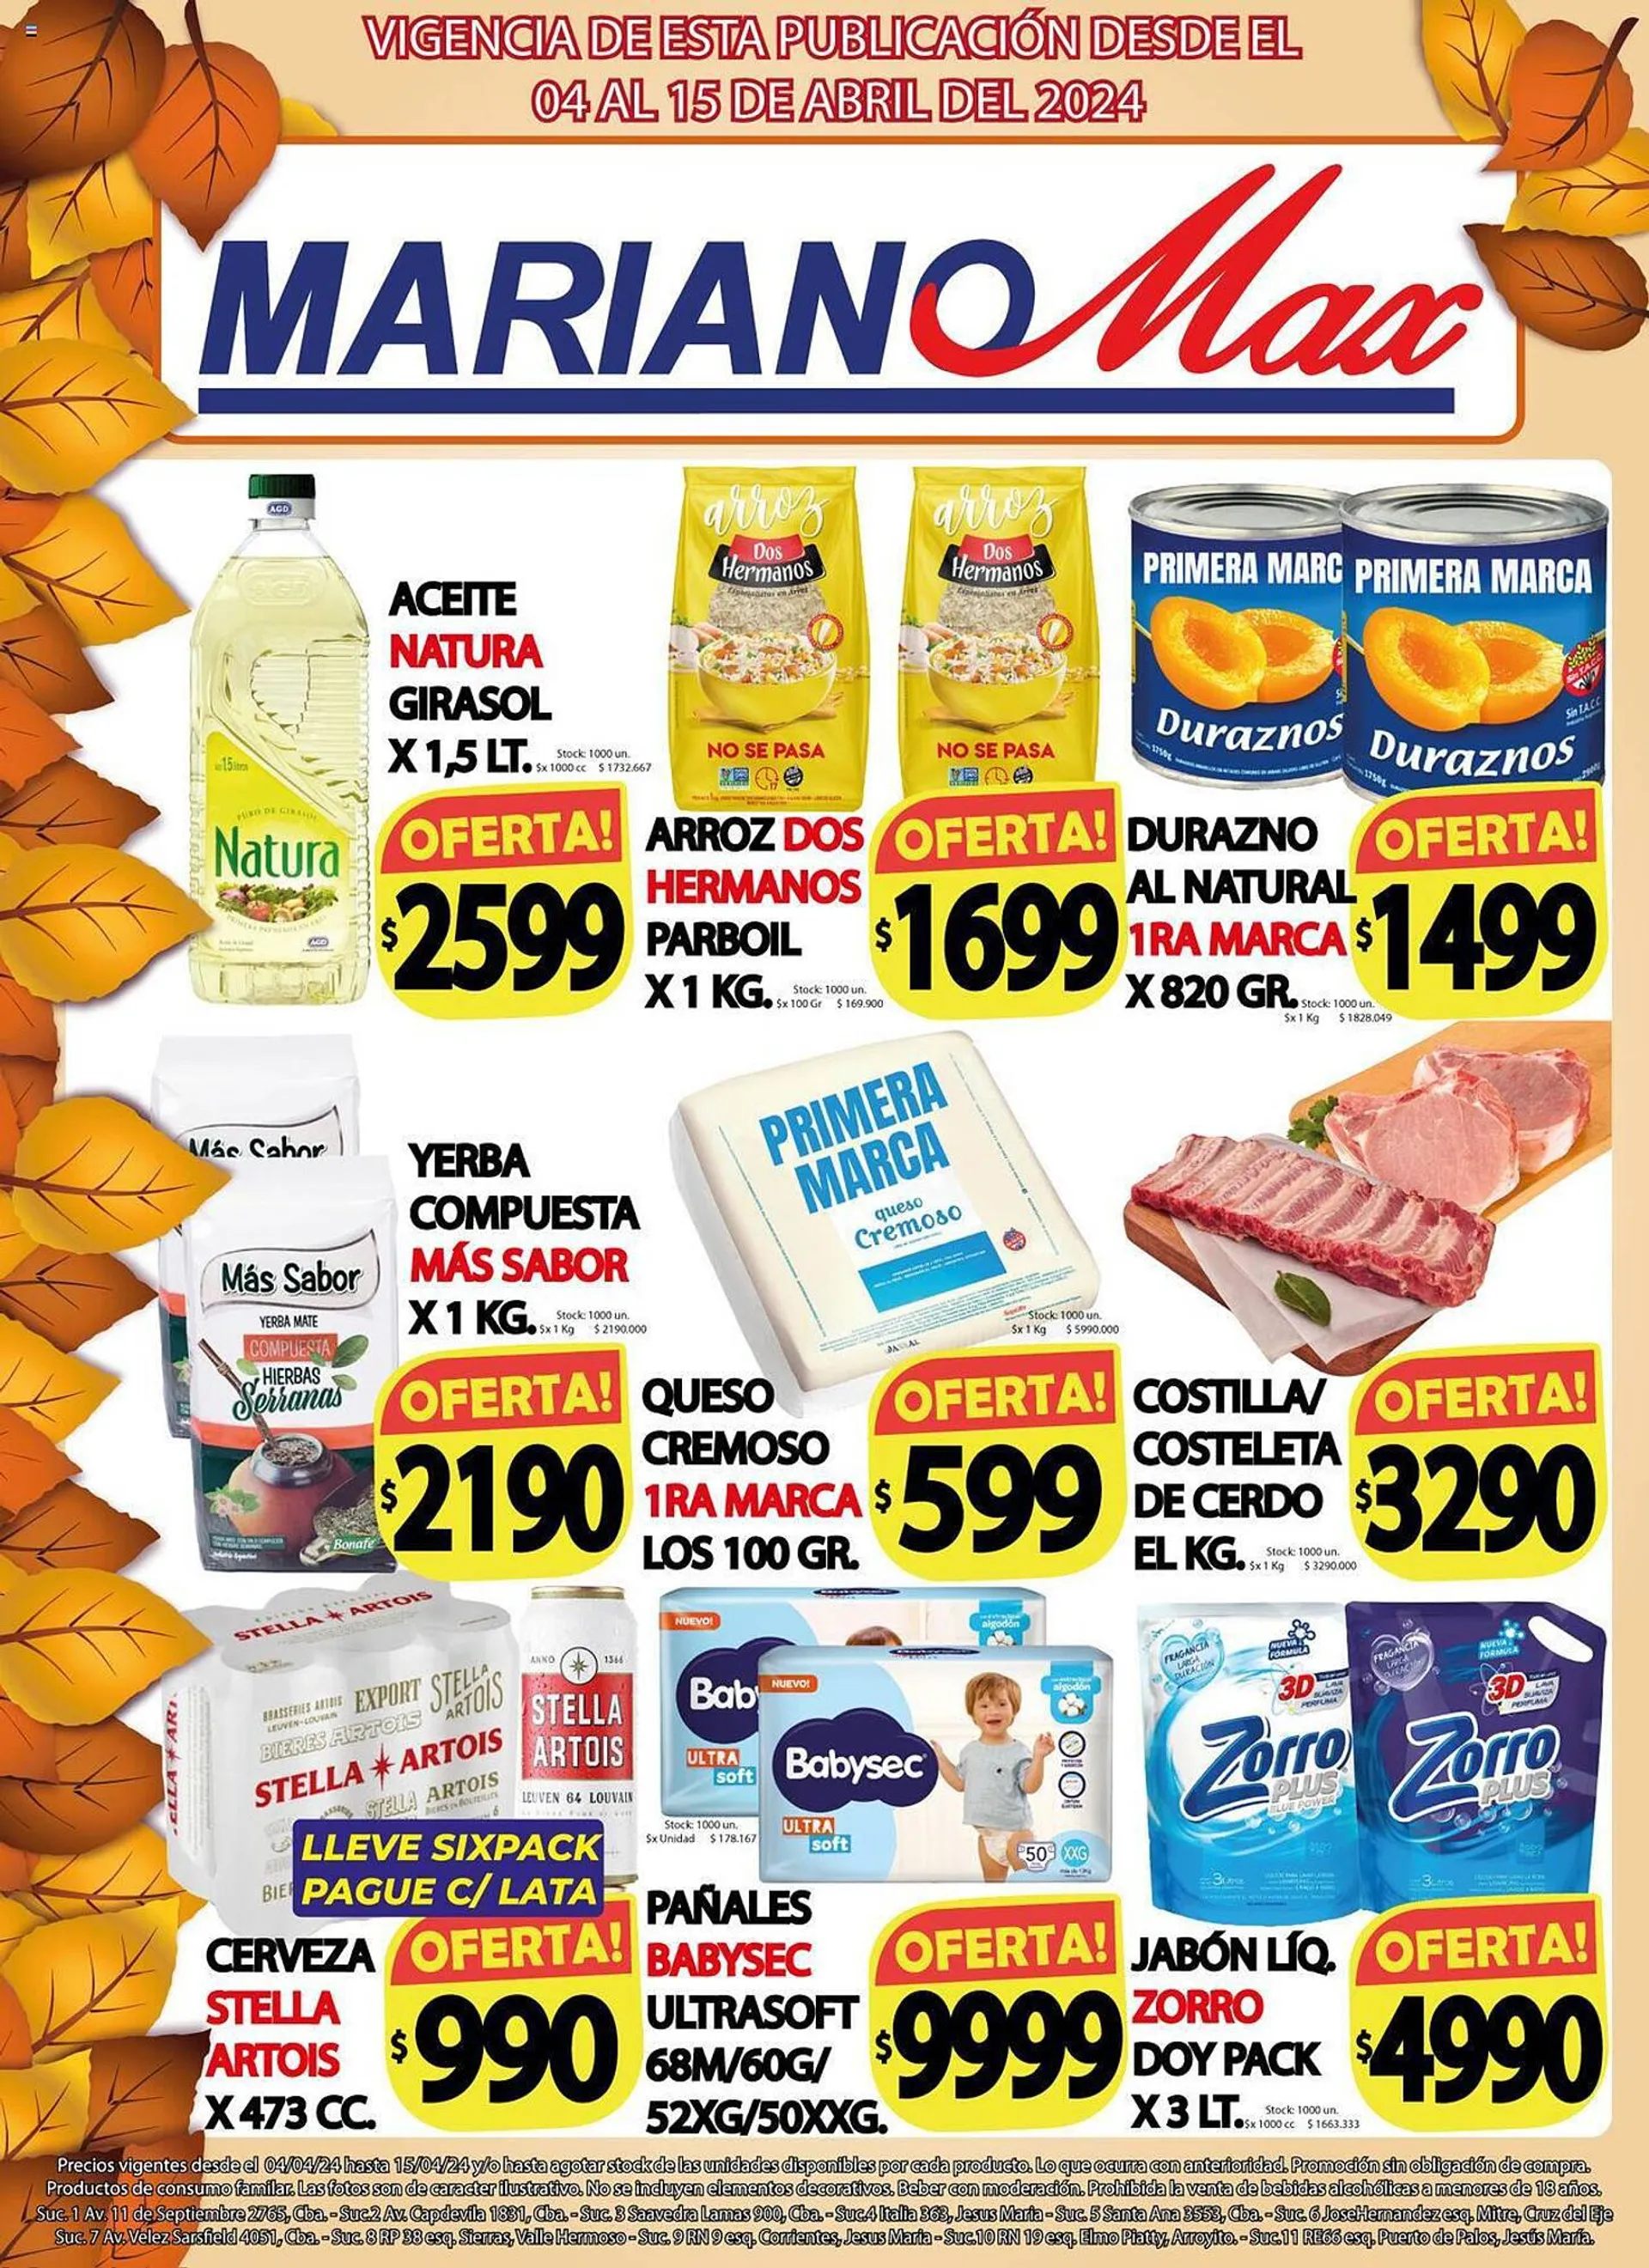 Ofertas de Catálogo Supermercados Mariano Max 4 de abril al 15 de abril 2024 - Página 1 del catálogo